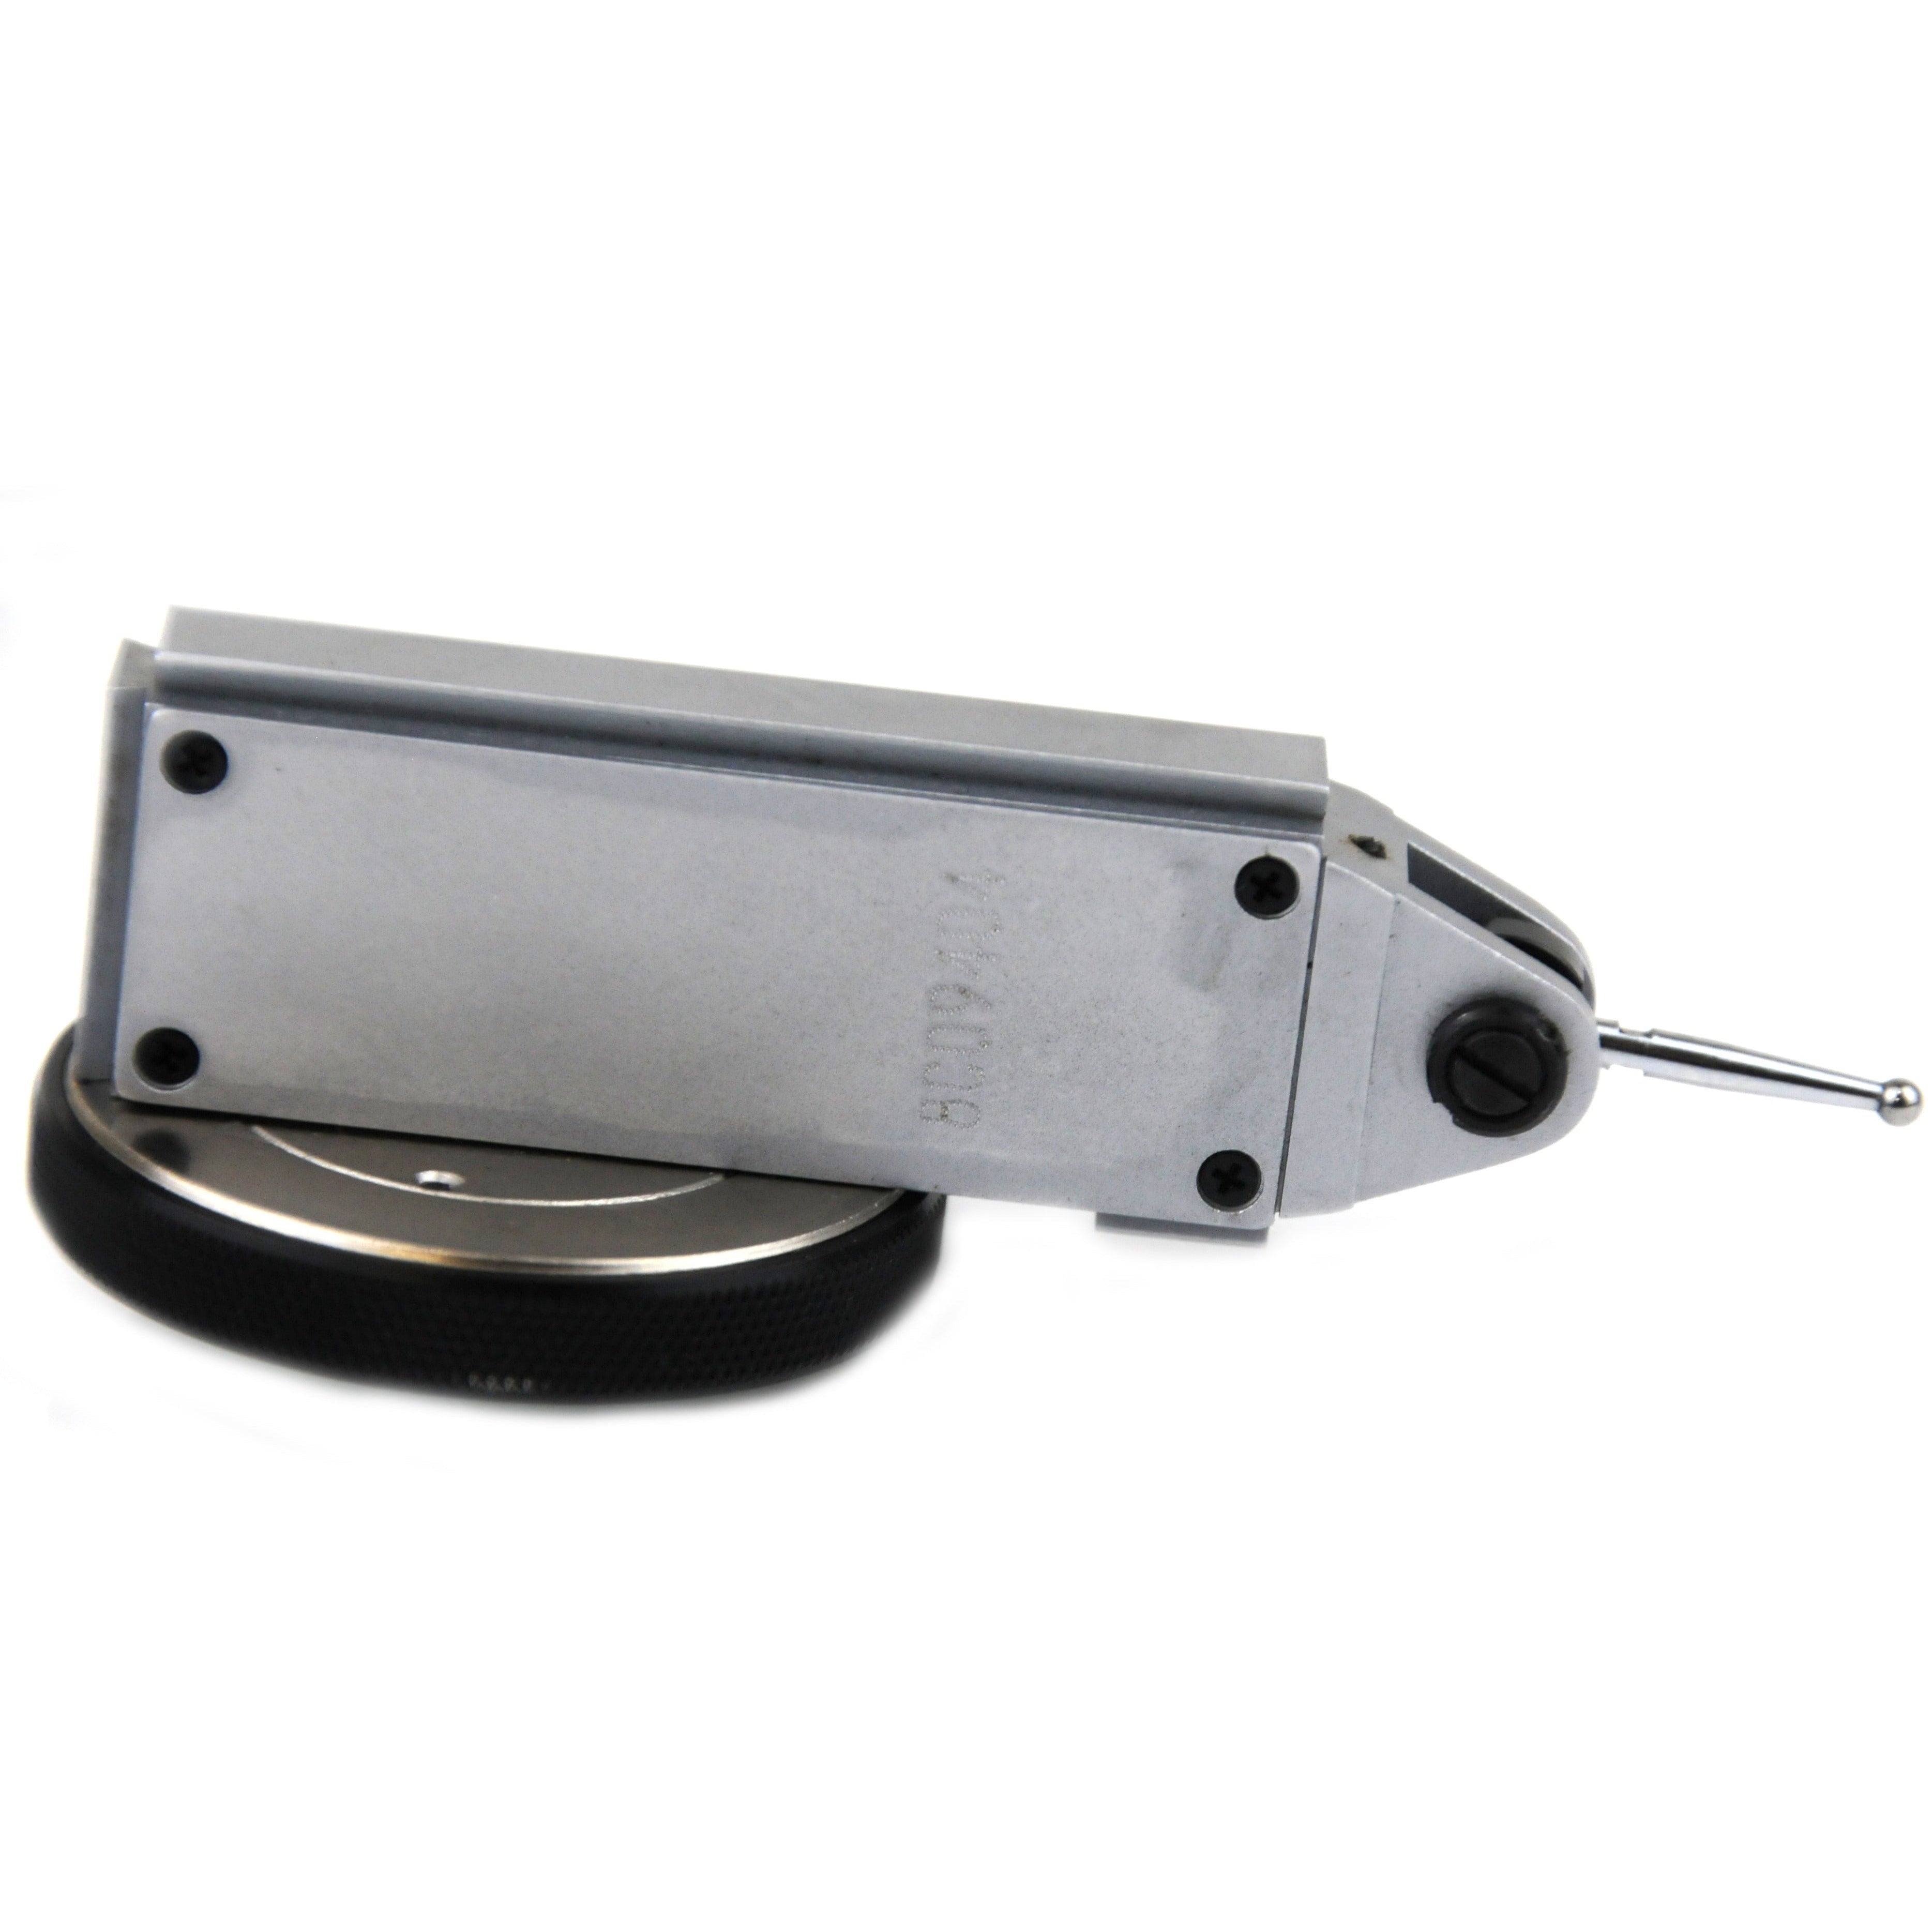 Insize Metric Dial Indicator 0.8mm Range Series 2381-08